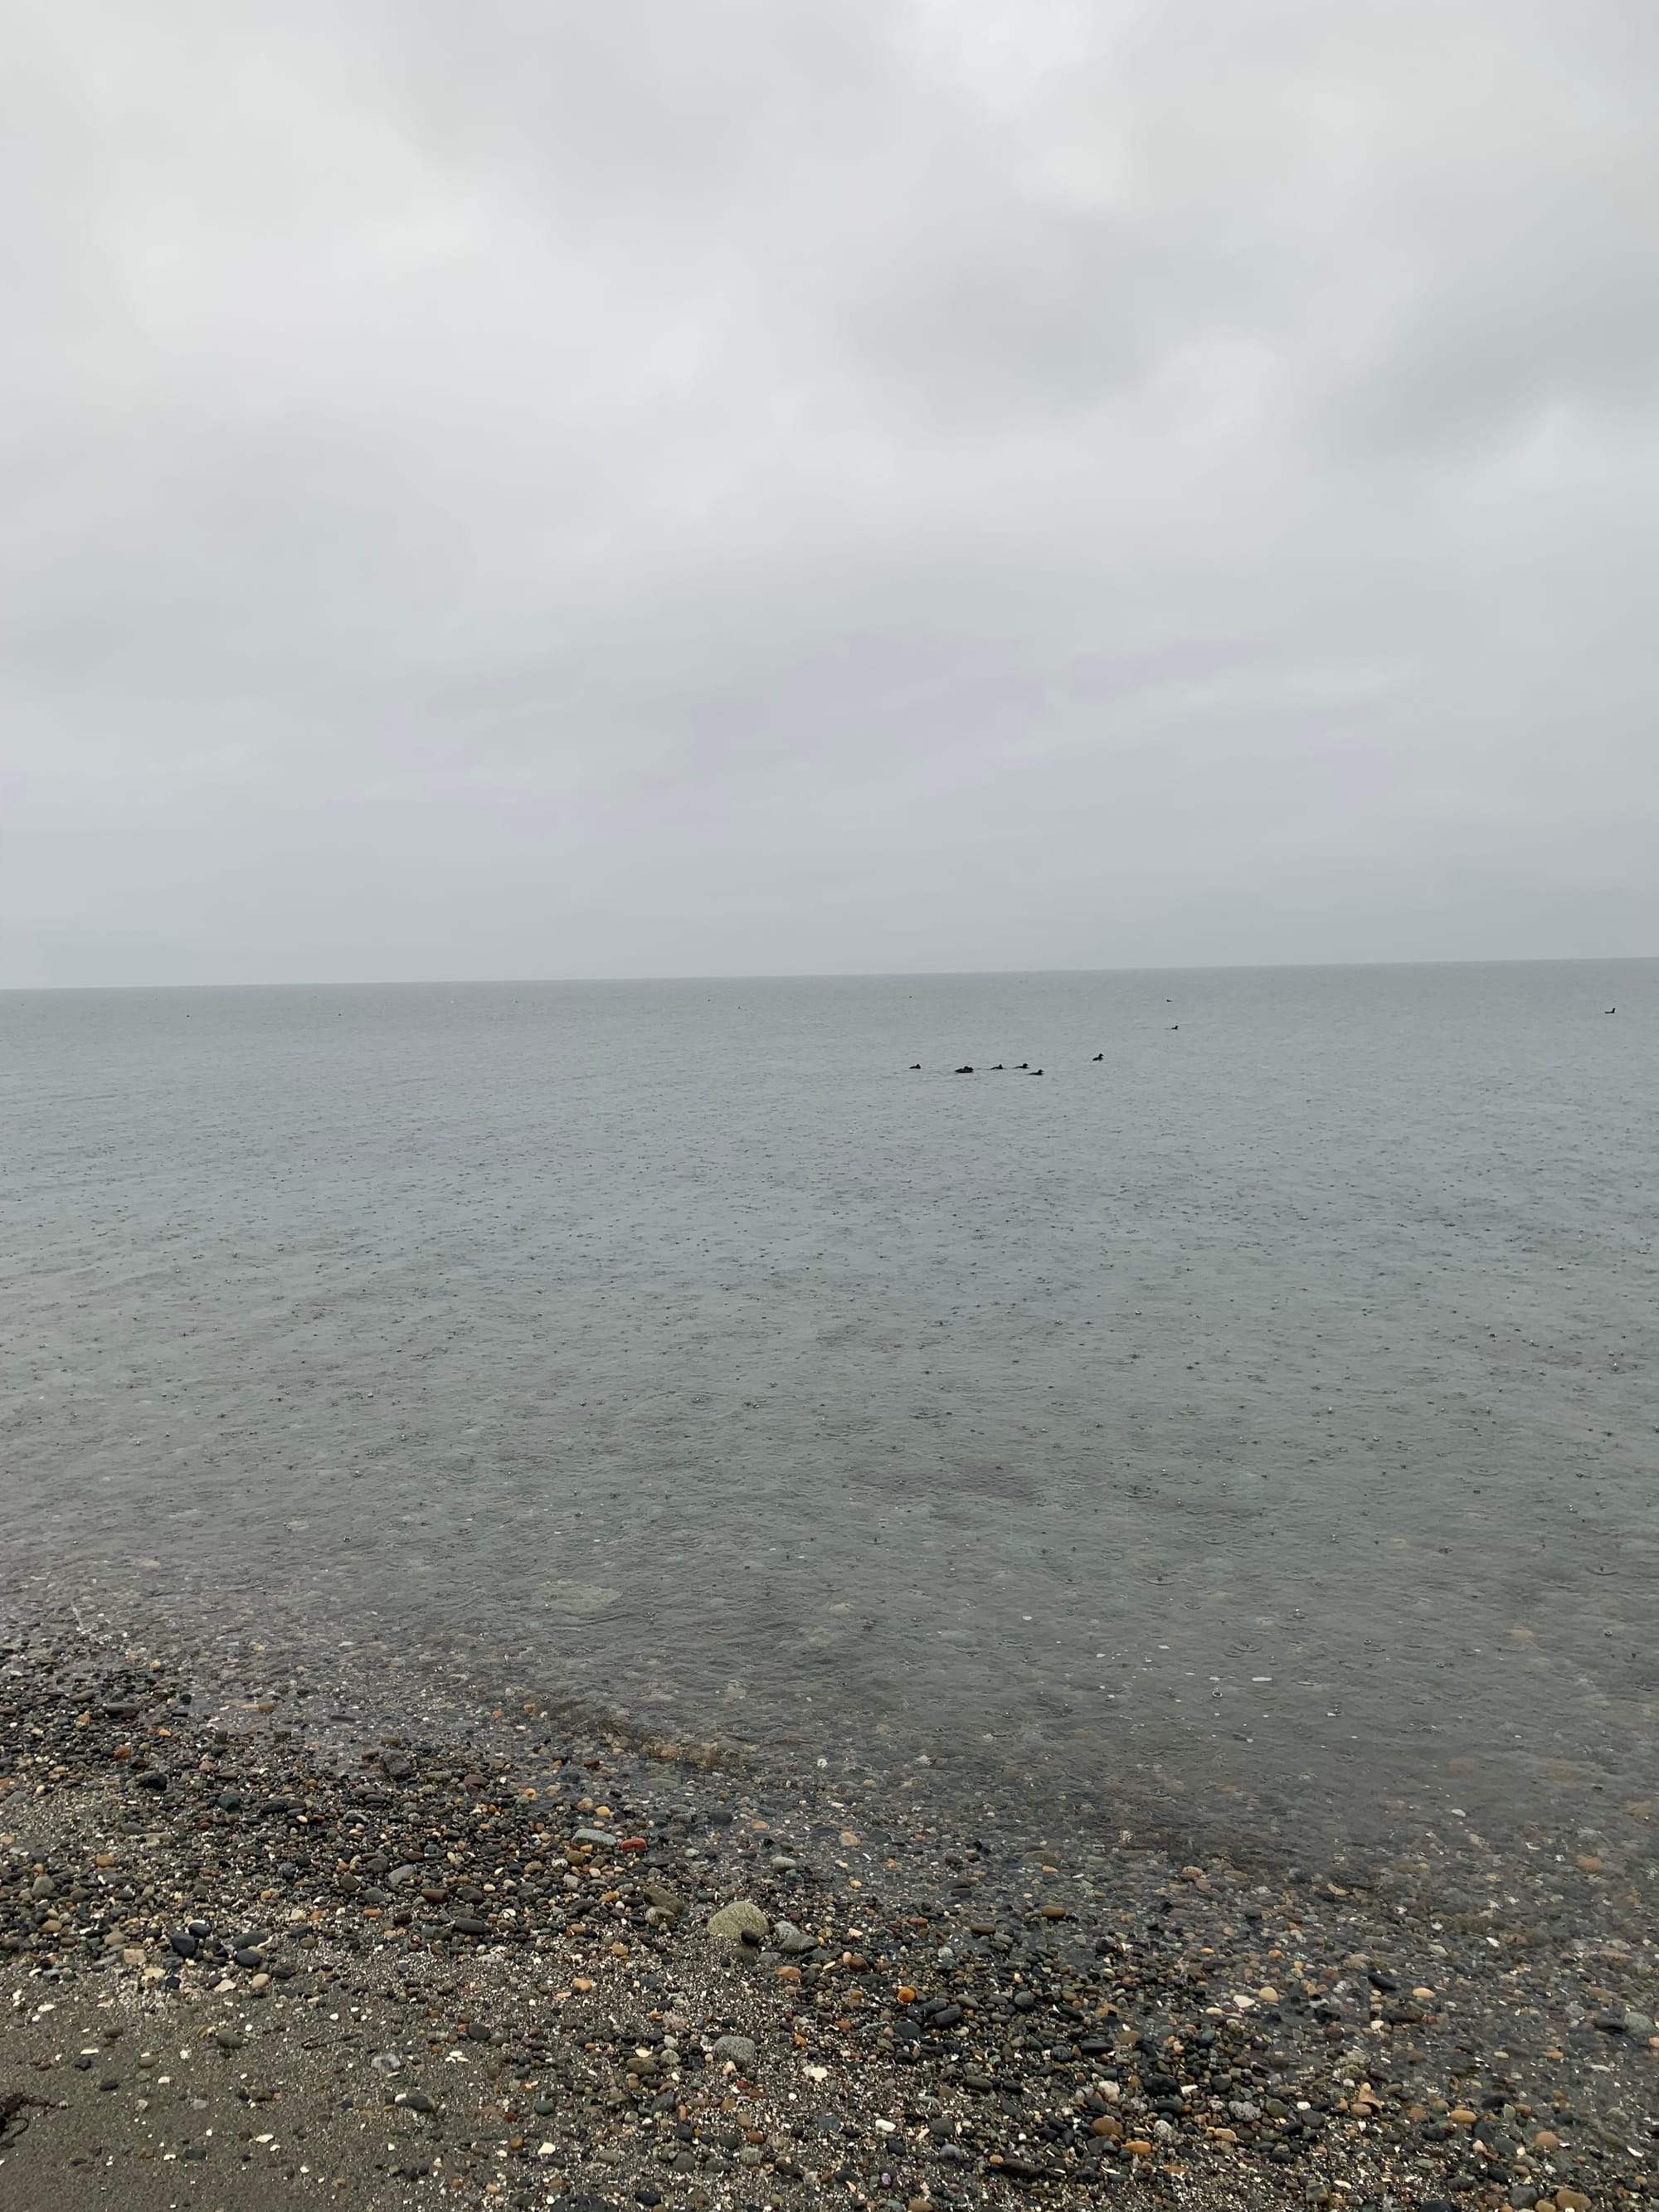 pebble beach, grey water, grey sky, a few black birds floating